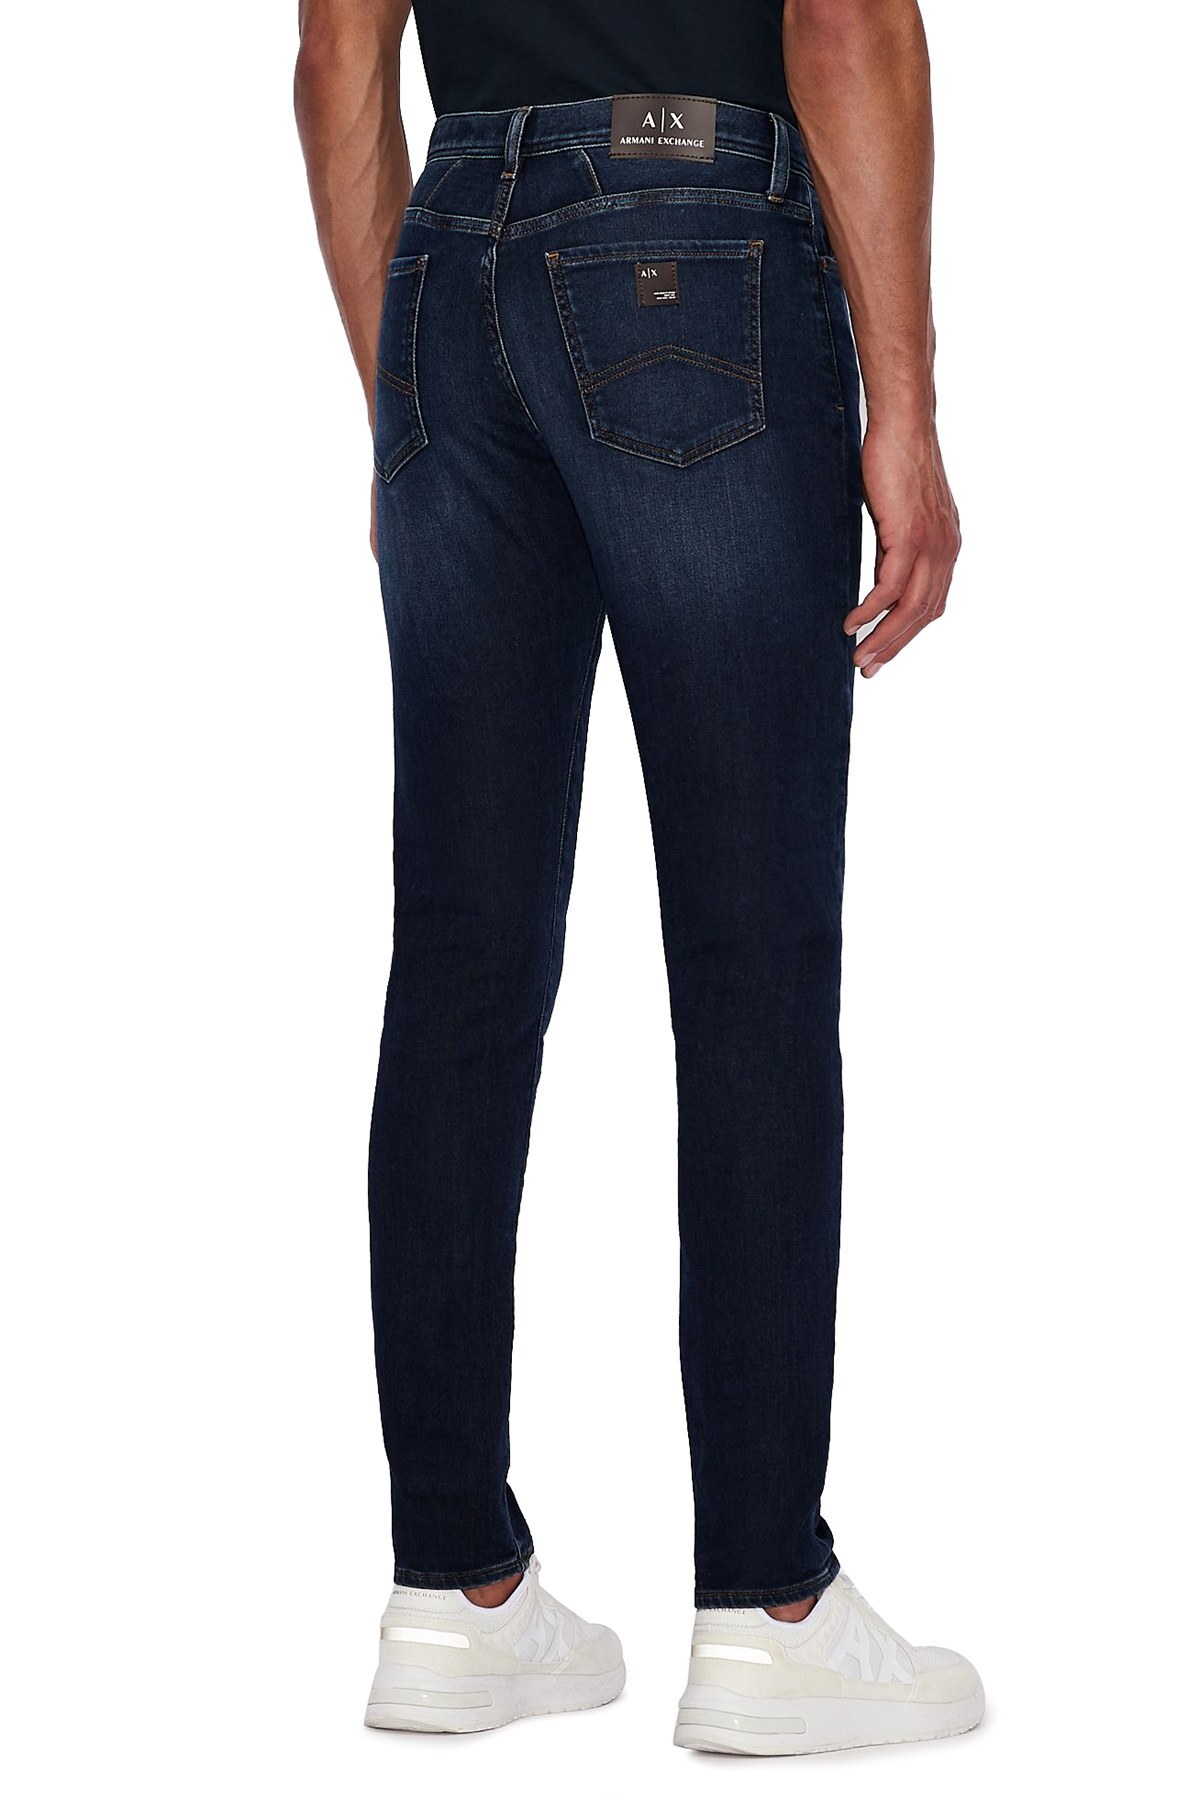 Armani Exchange Pamuklu Super Skinny J33 Jeans Erkek Kot Pantolon 3KZJ33 ZAQMZ 1500 LACİVERT